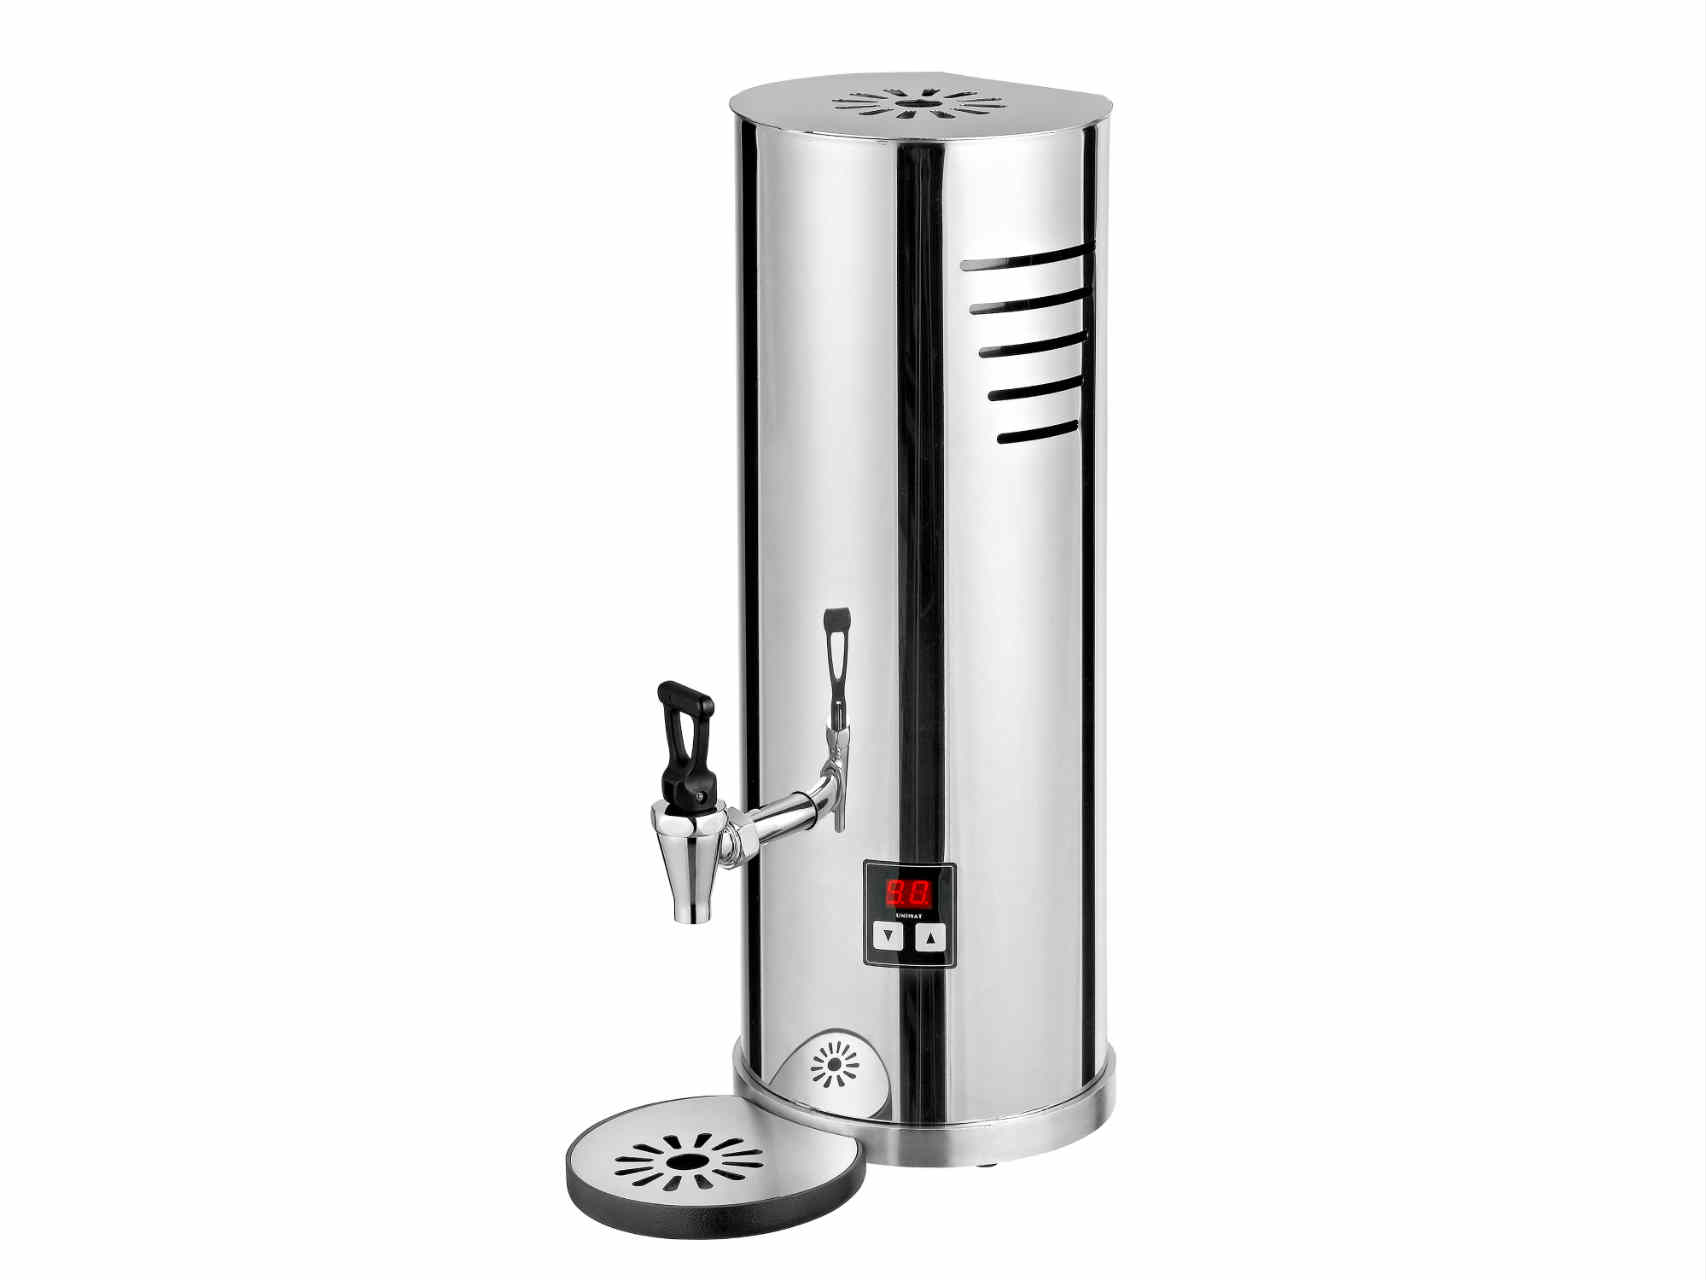 UNIMMAT Heißwasserbereiter Frankfurt Teeautomat, ) Teemaschine Samowar, (2100 Watt